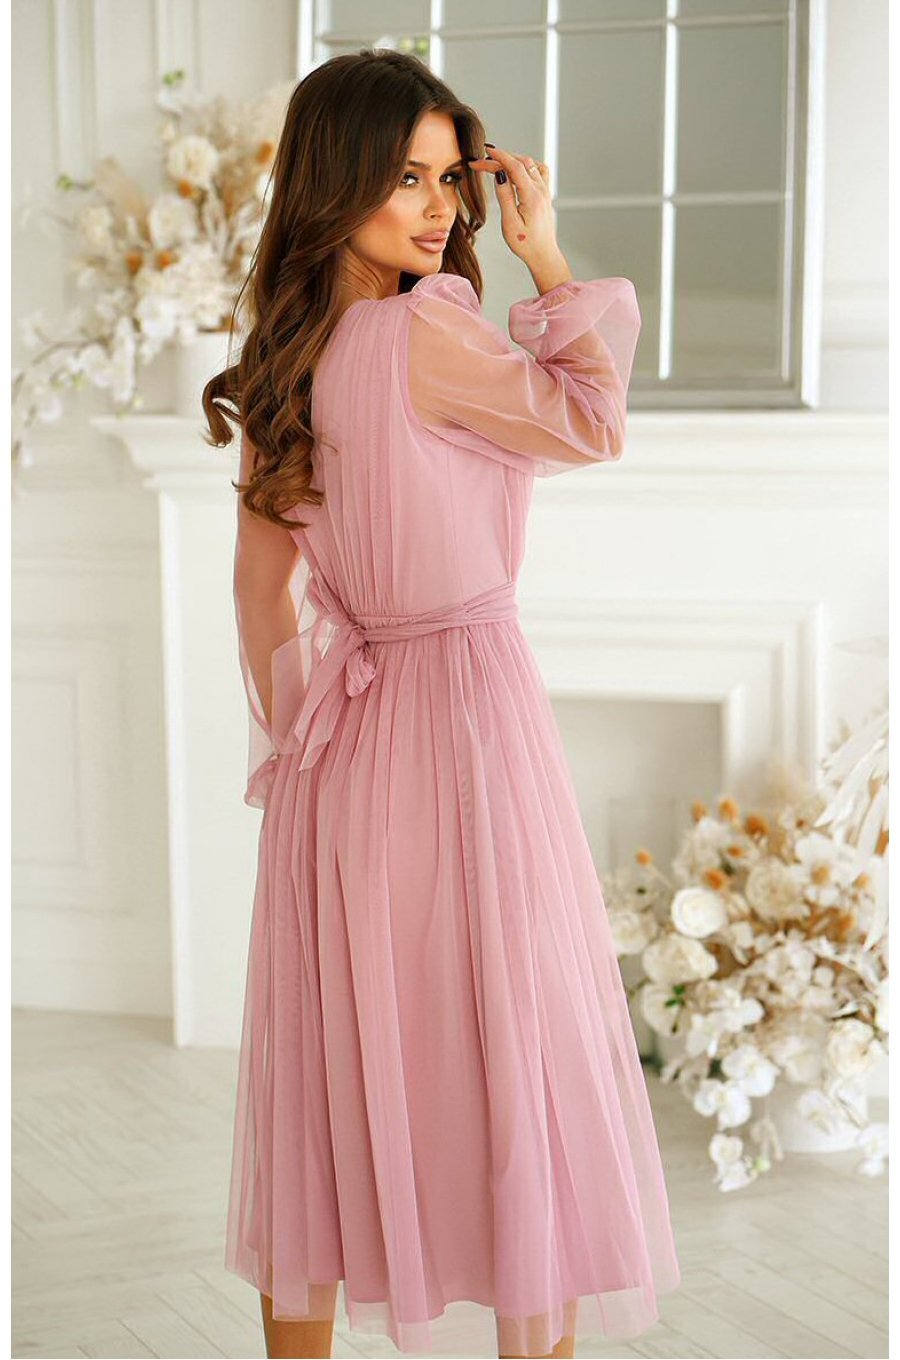 Rochie eleganta midi, din tul cu glitter, roz, evazata, cu maneca lunga, Petra 2 - jojofashion.ro